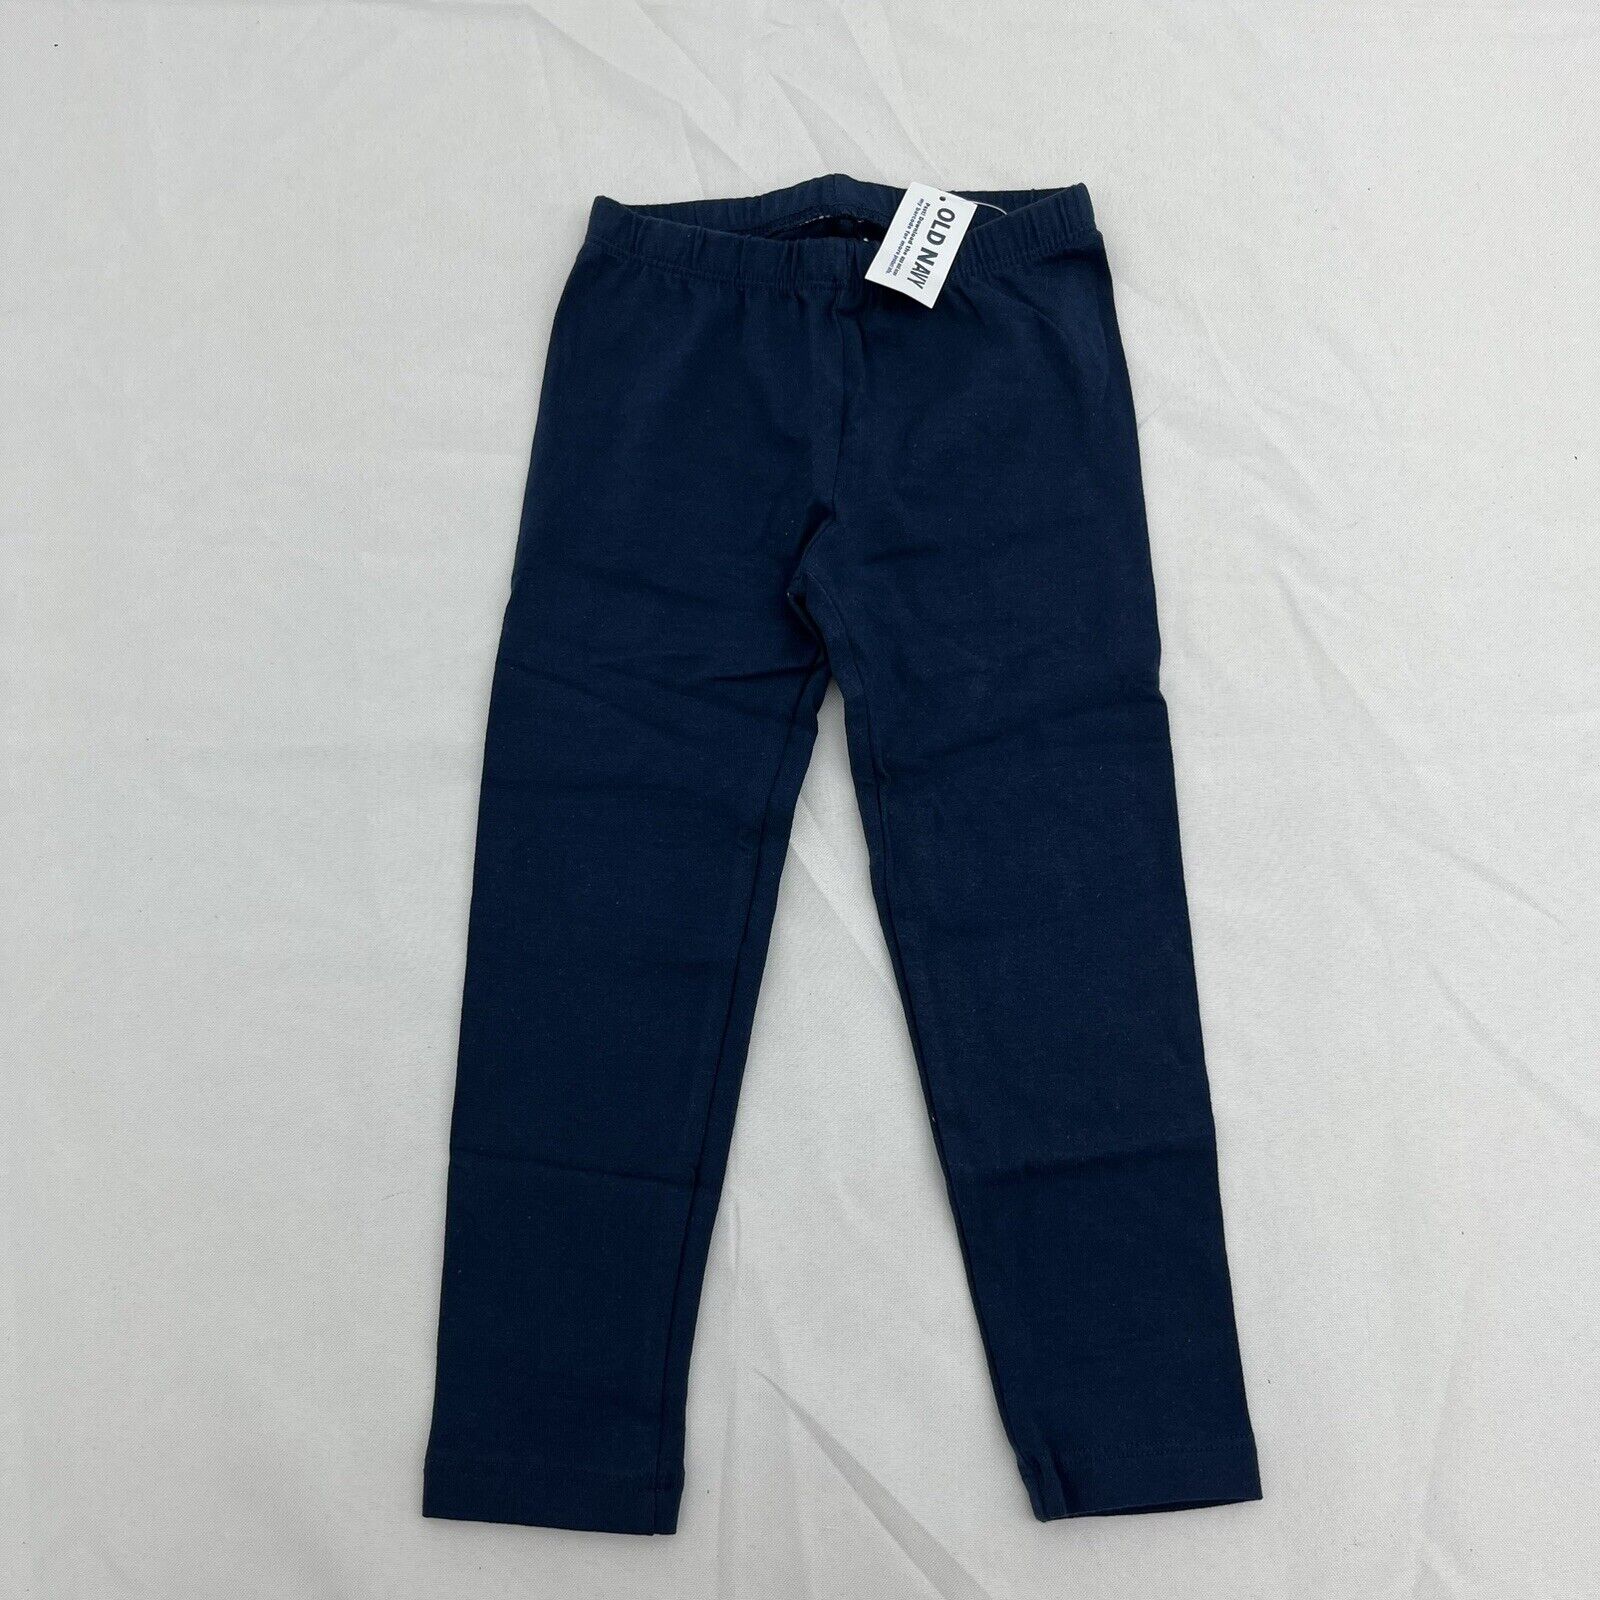 Old Navy Blue Jersey-Knit Leggings Girls Size 3T NEW - beyond exchange